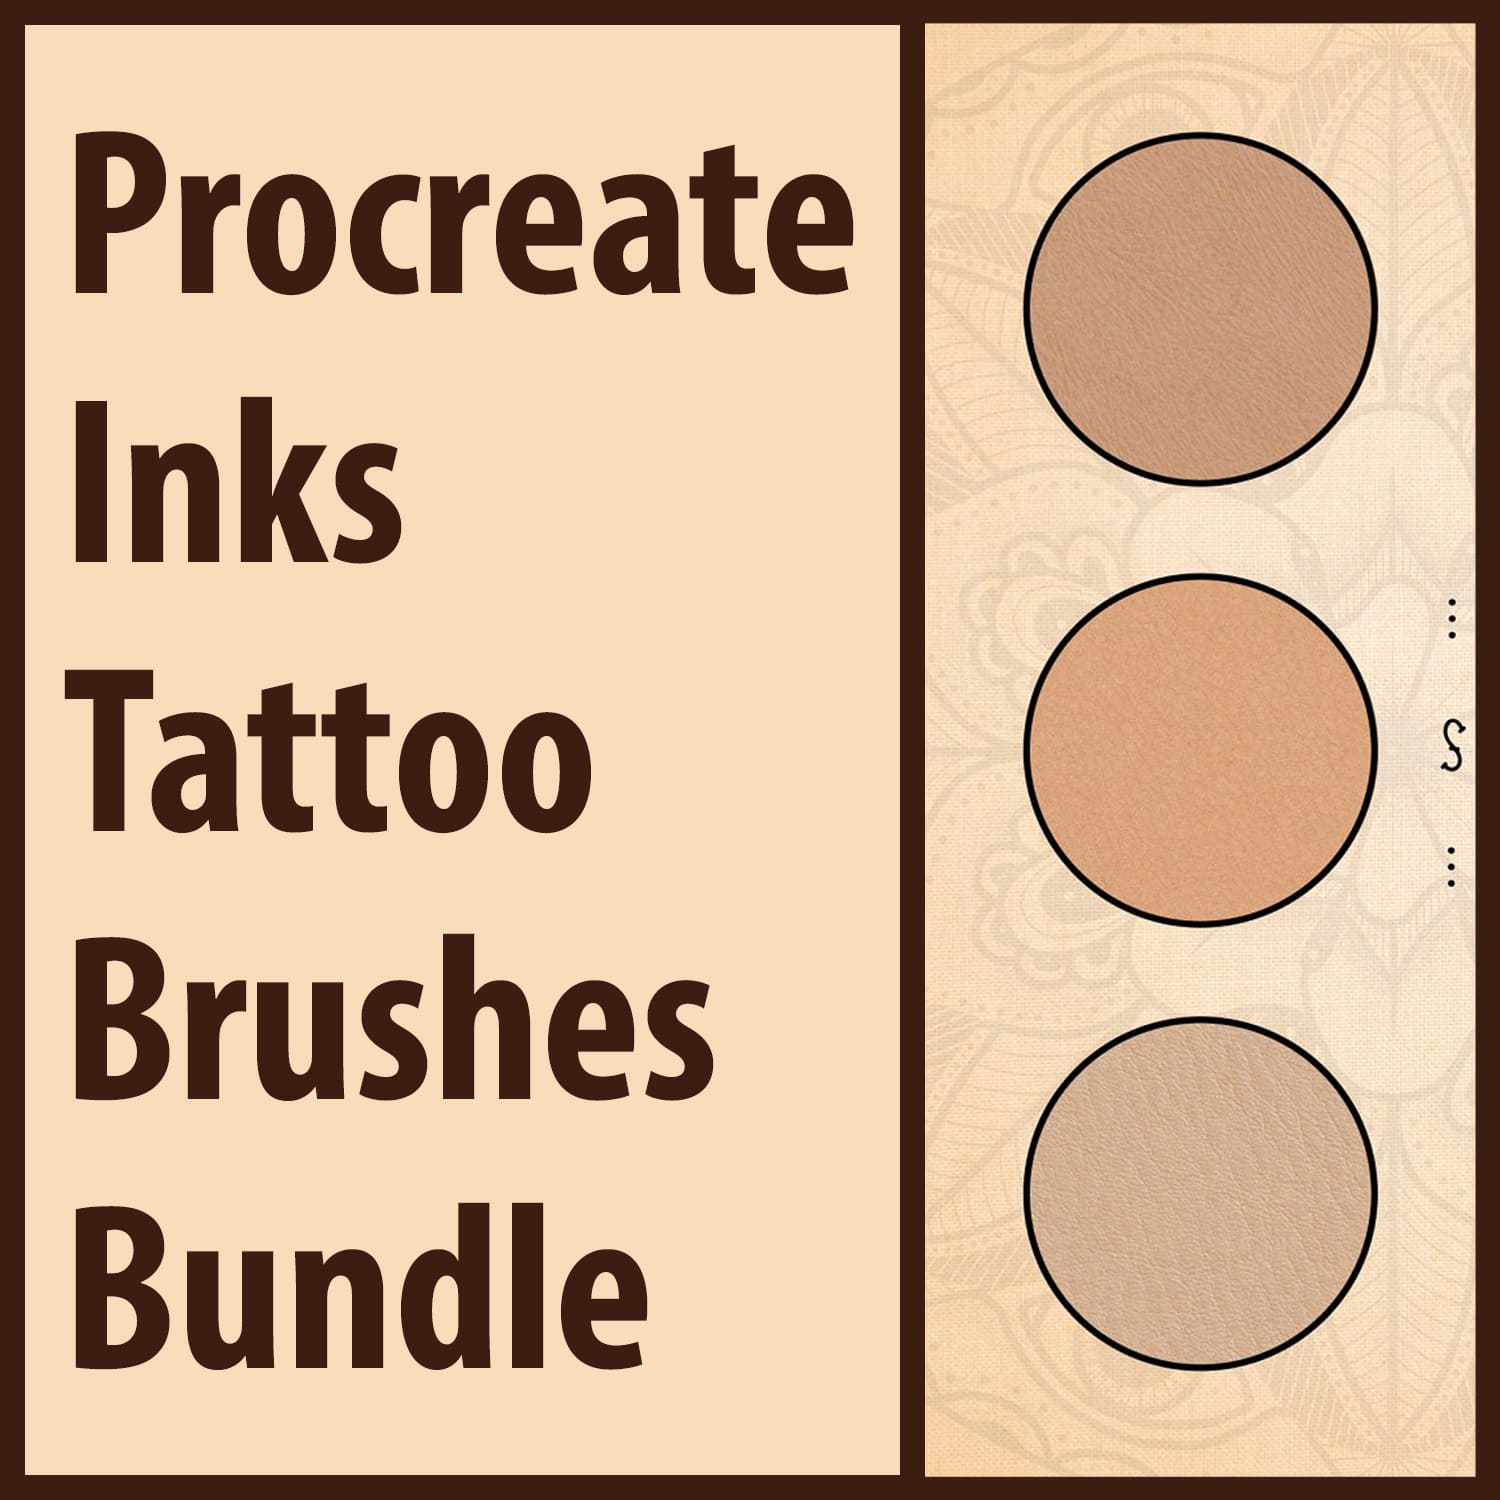 Procreate Inks Tattoo Brushes Bundle main cover.